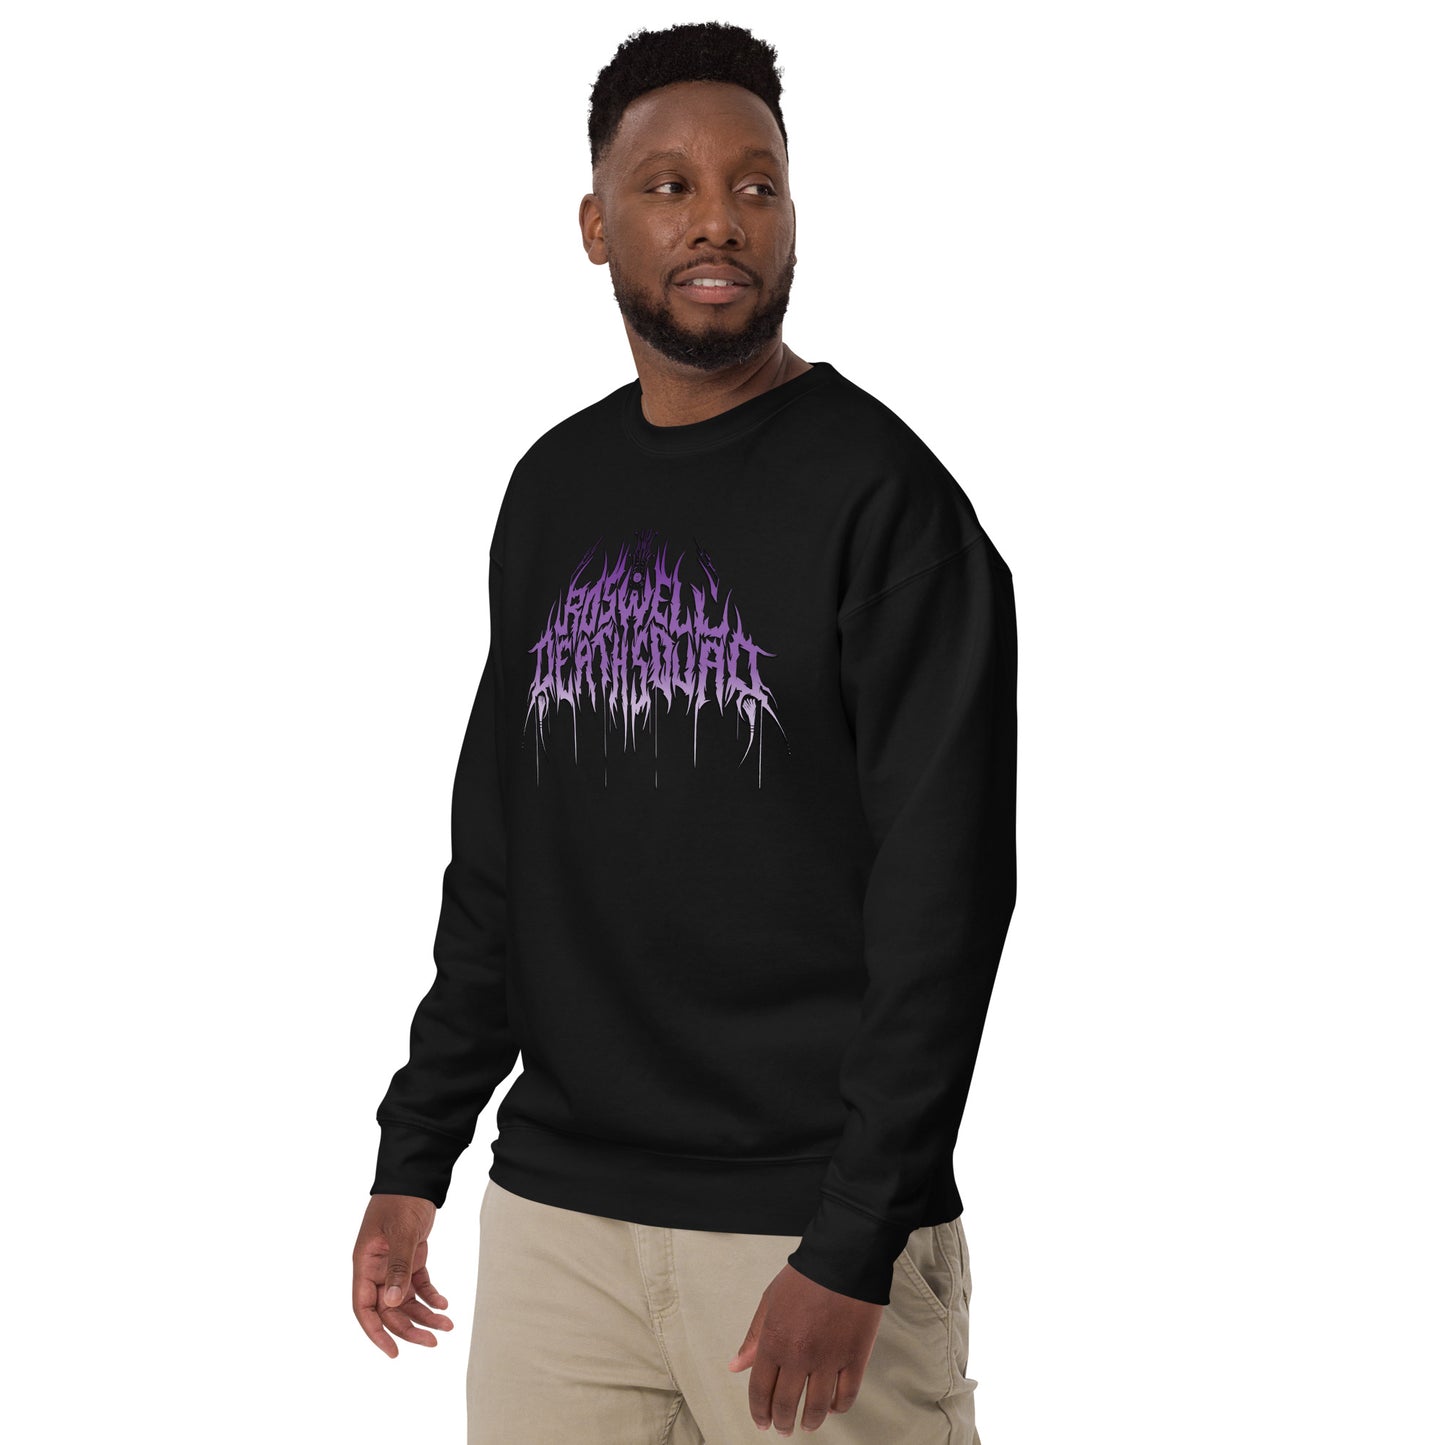 Roswell Deathsqual Unisex Sweatshirt (Purple Edition)